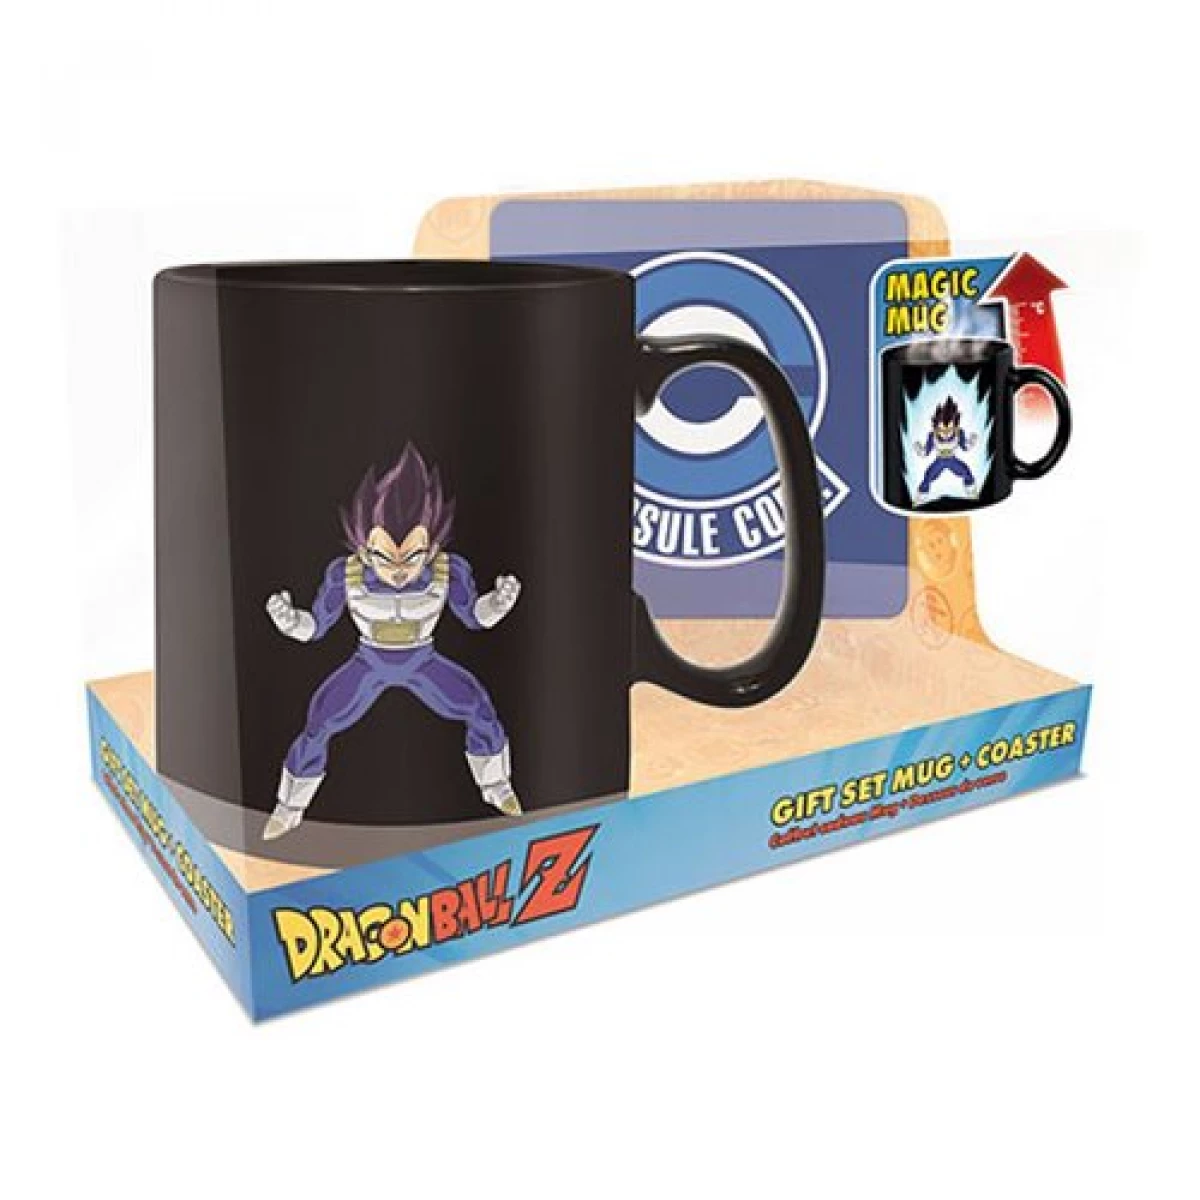 Dragon Ball Z Vegeta Magic Mug and Coaster Gift Set